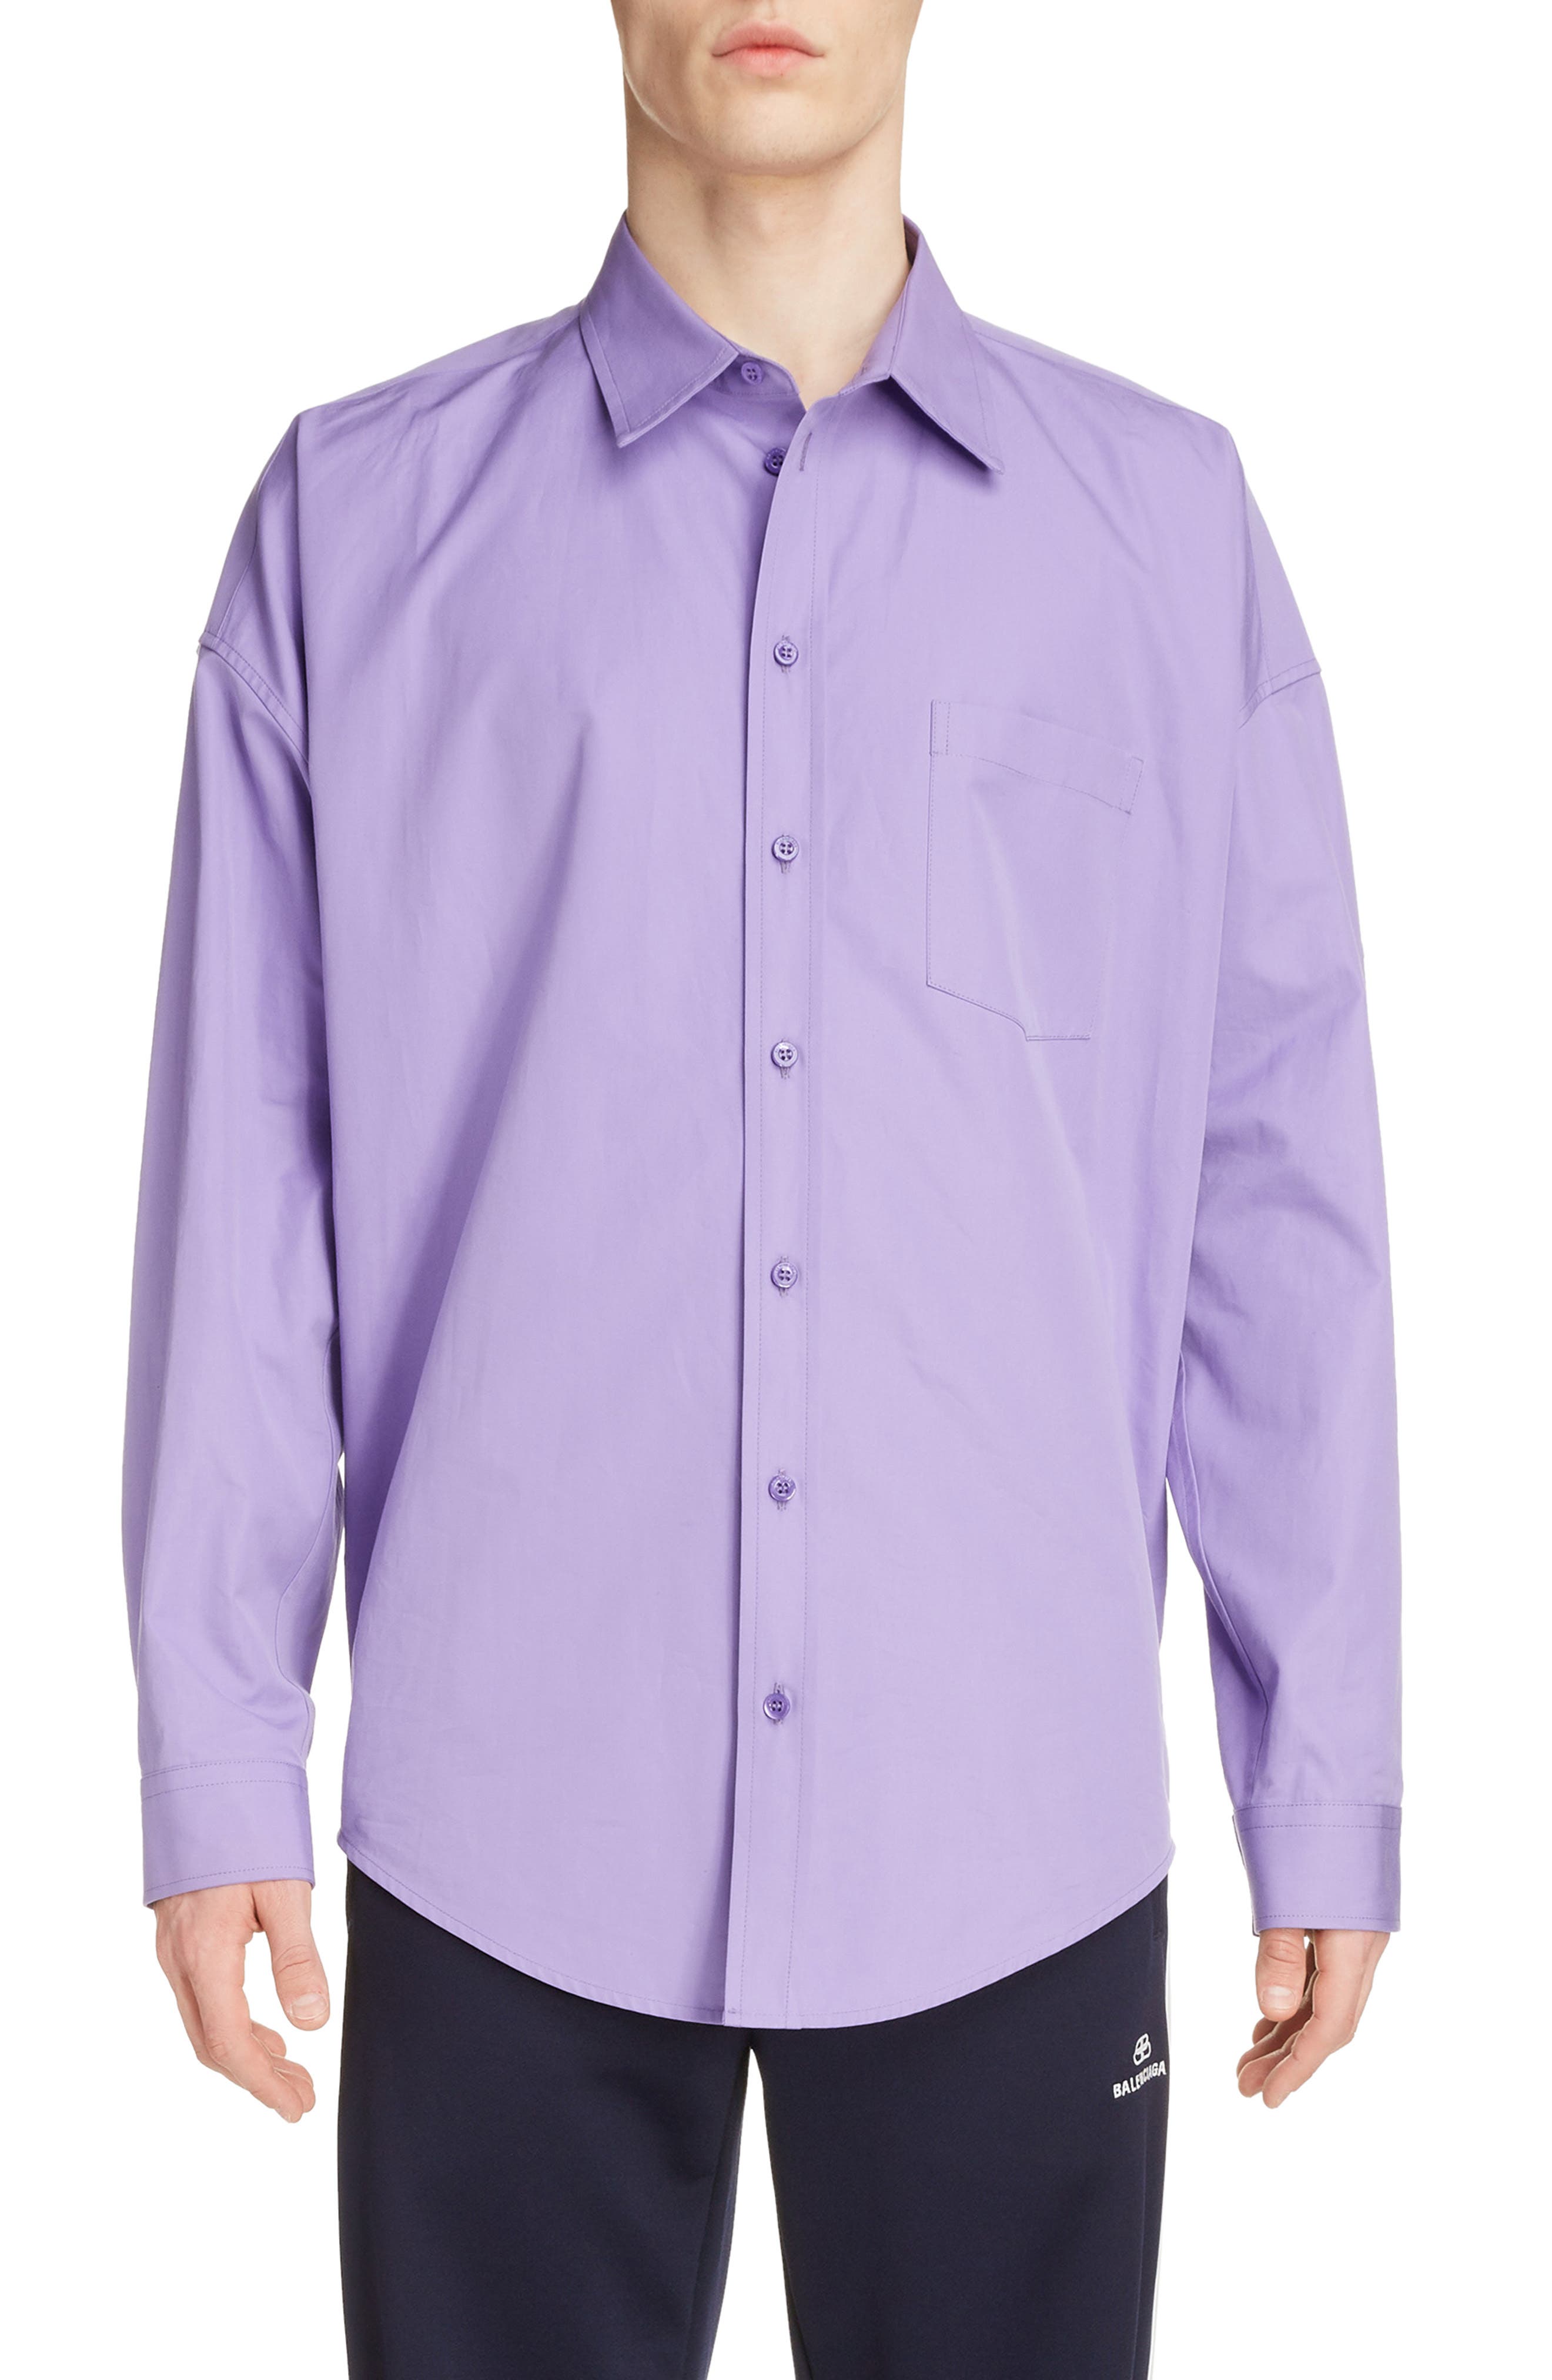 balenciaga sweatsuit mens purple